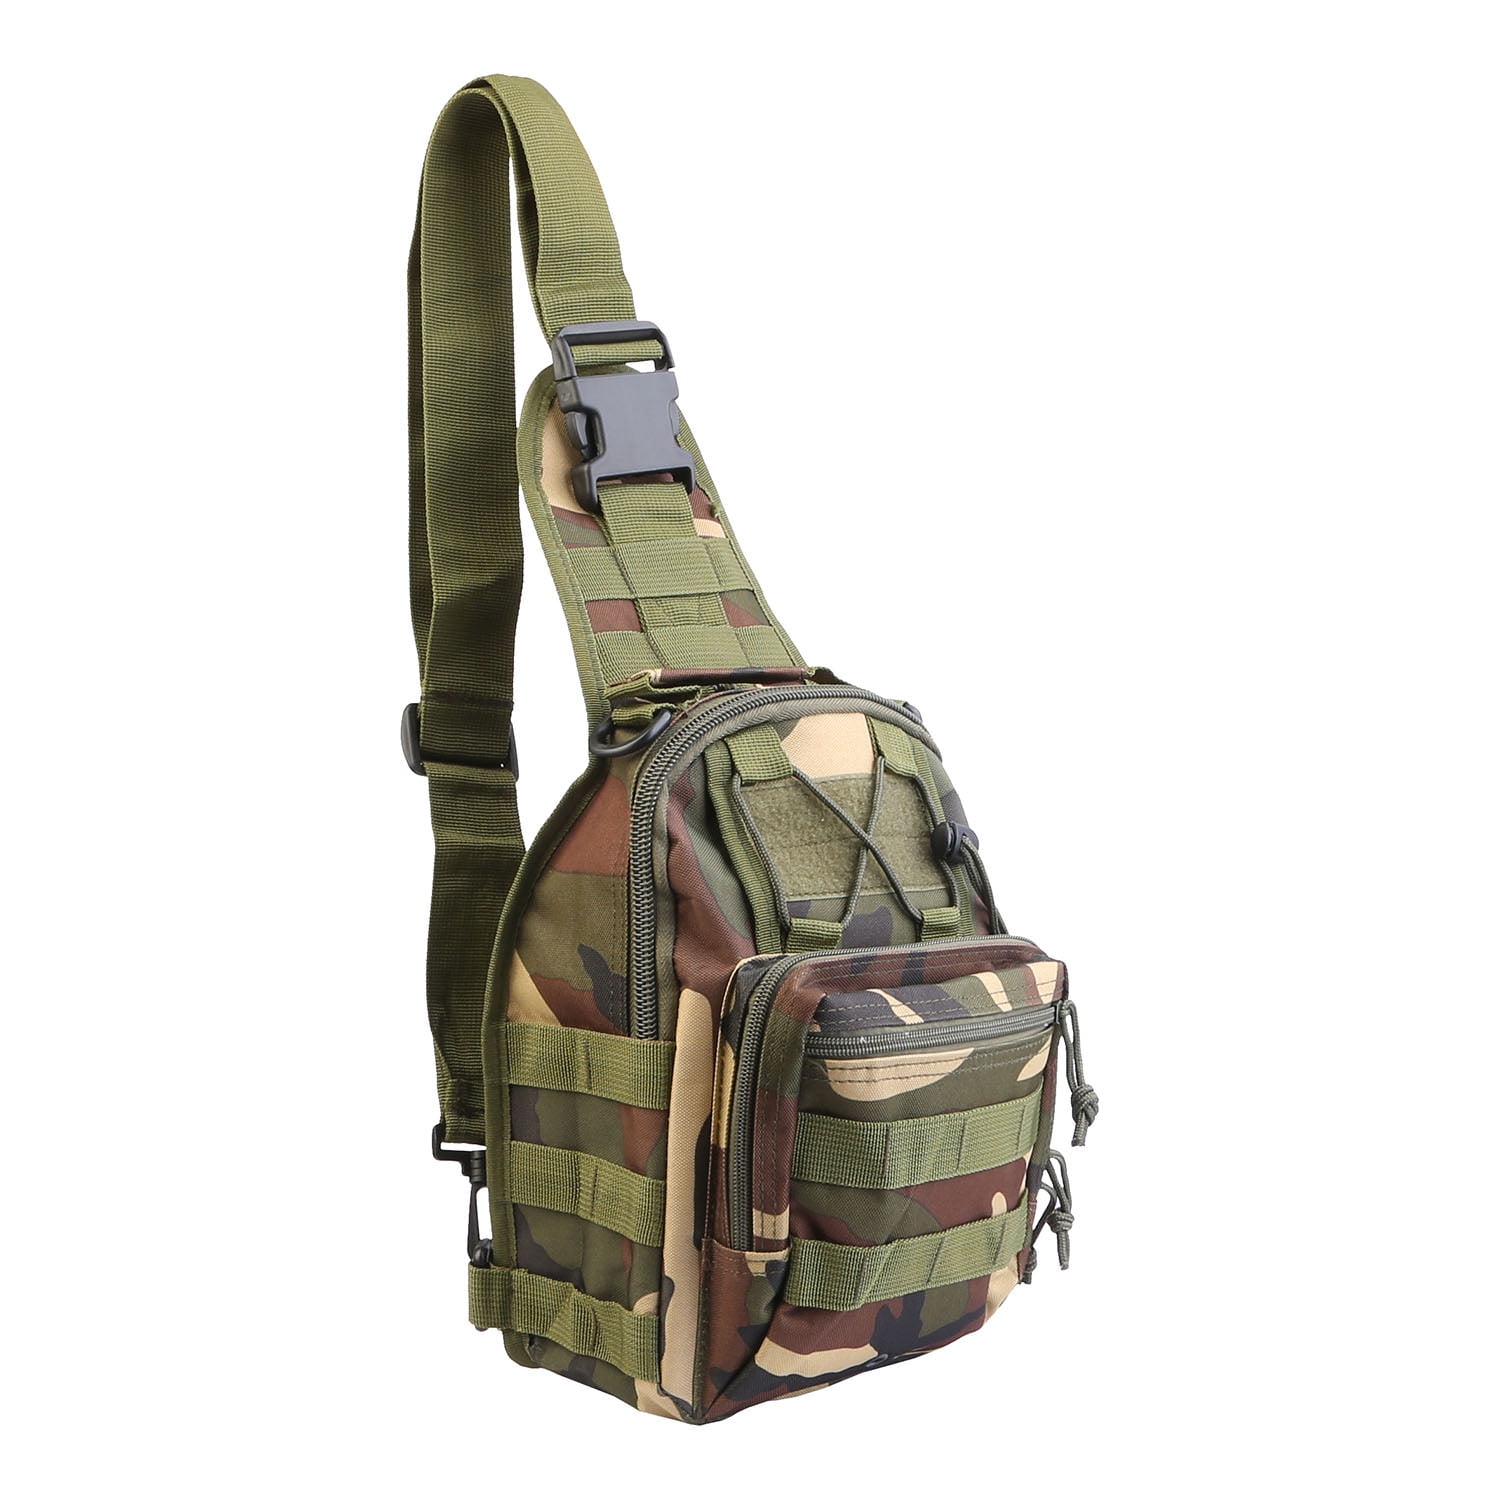 iMounTEK - Outdoor Military Tactical Shoulder Chest Sling Backpack - www.waldenwongart.com - www.waldenwongart.com